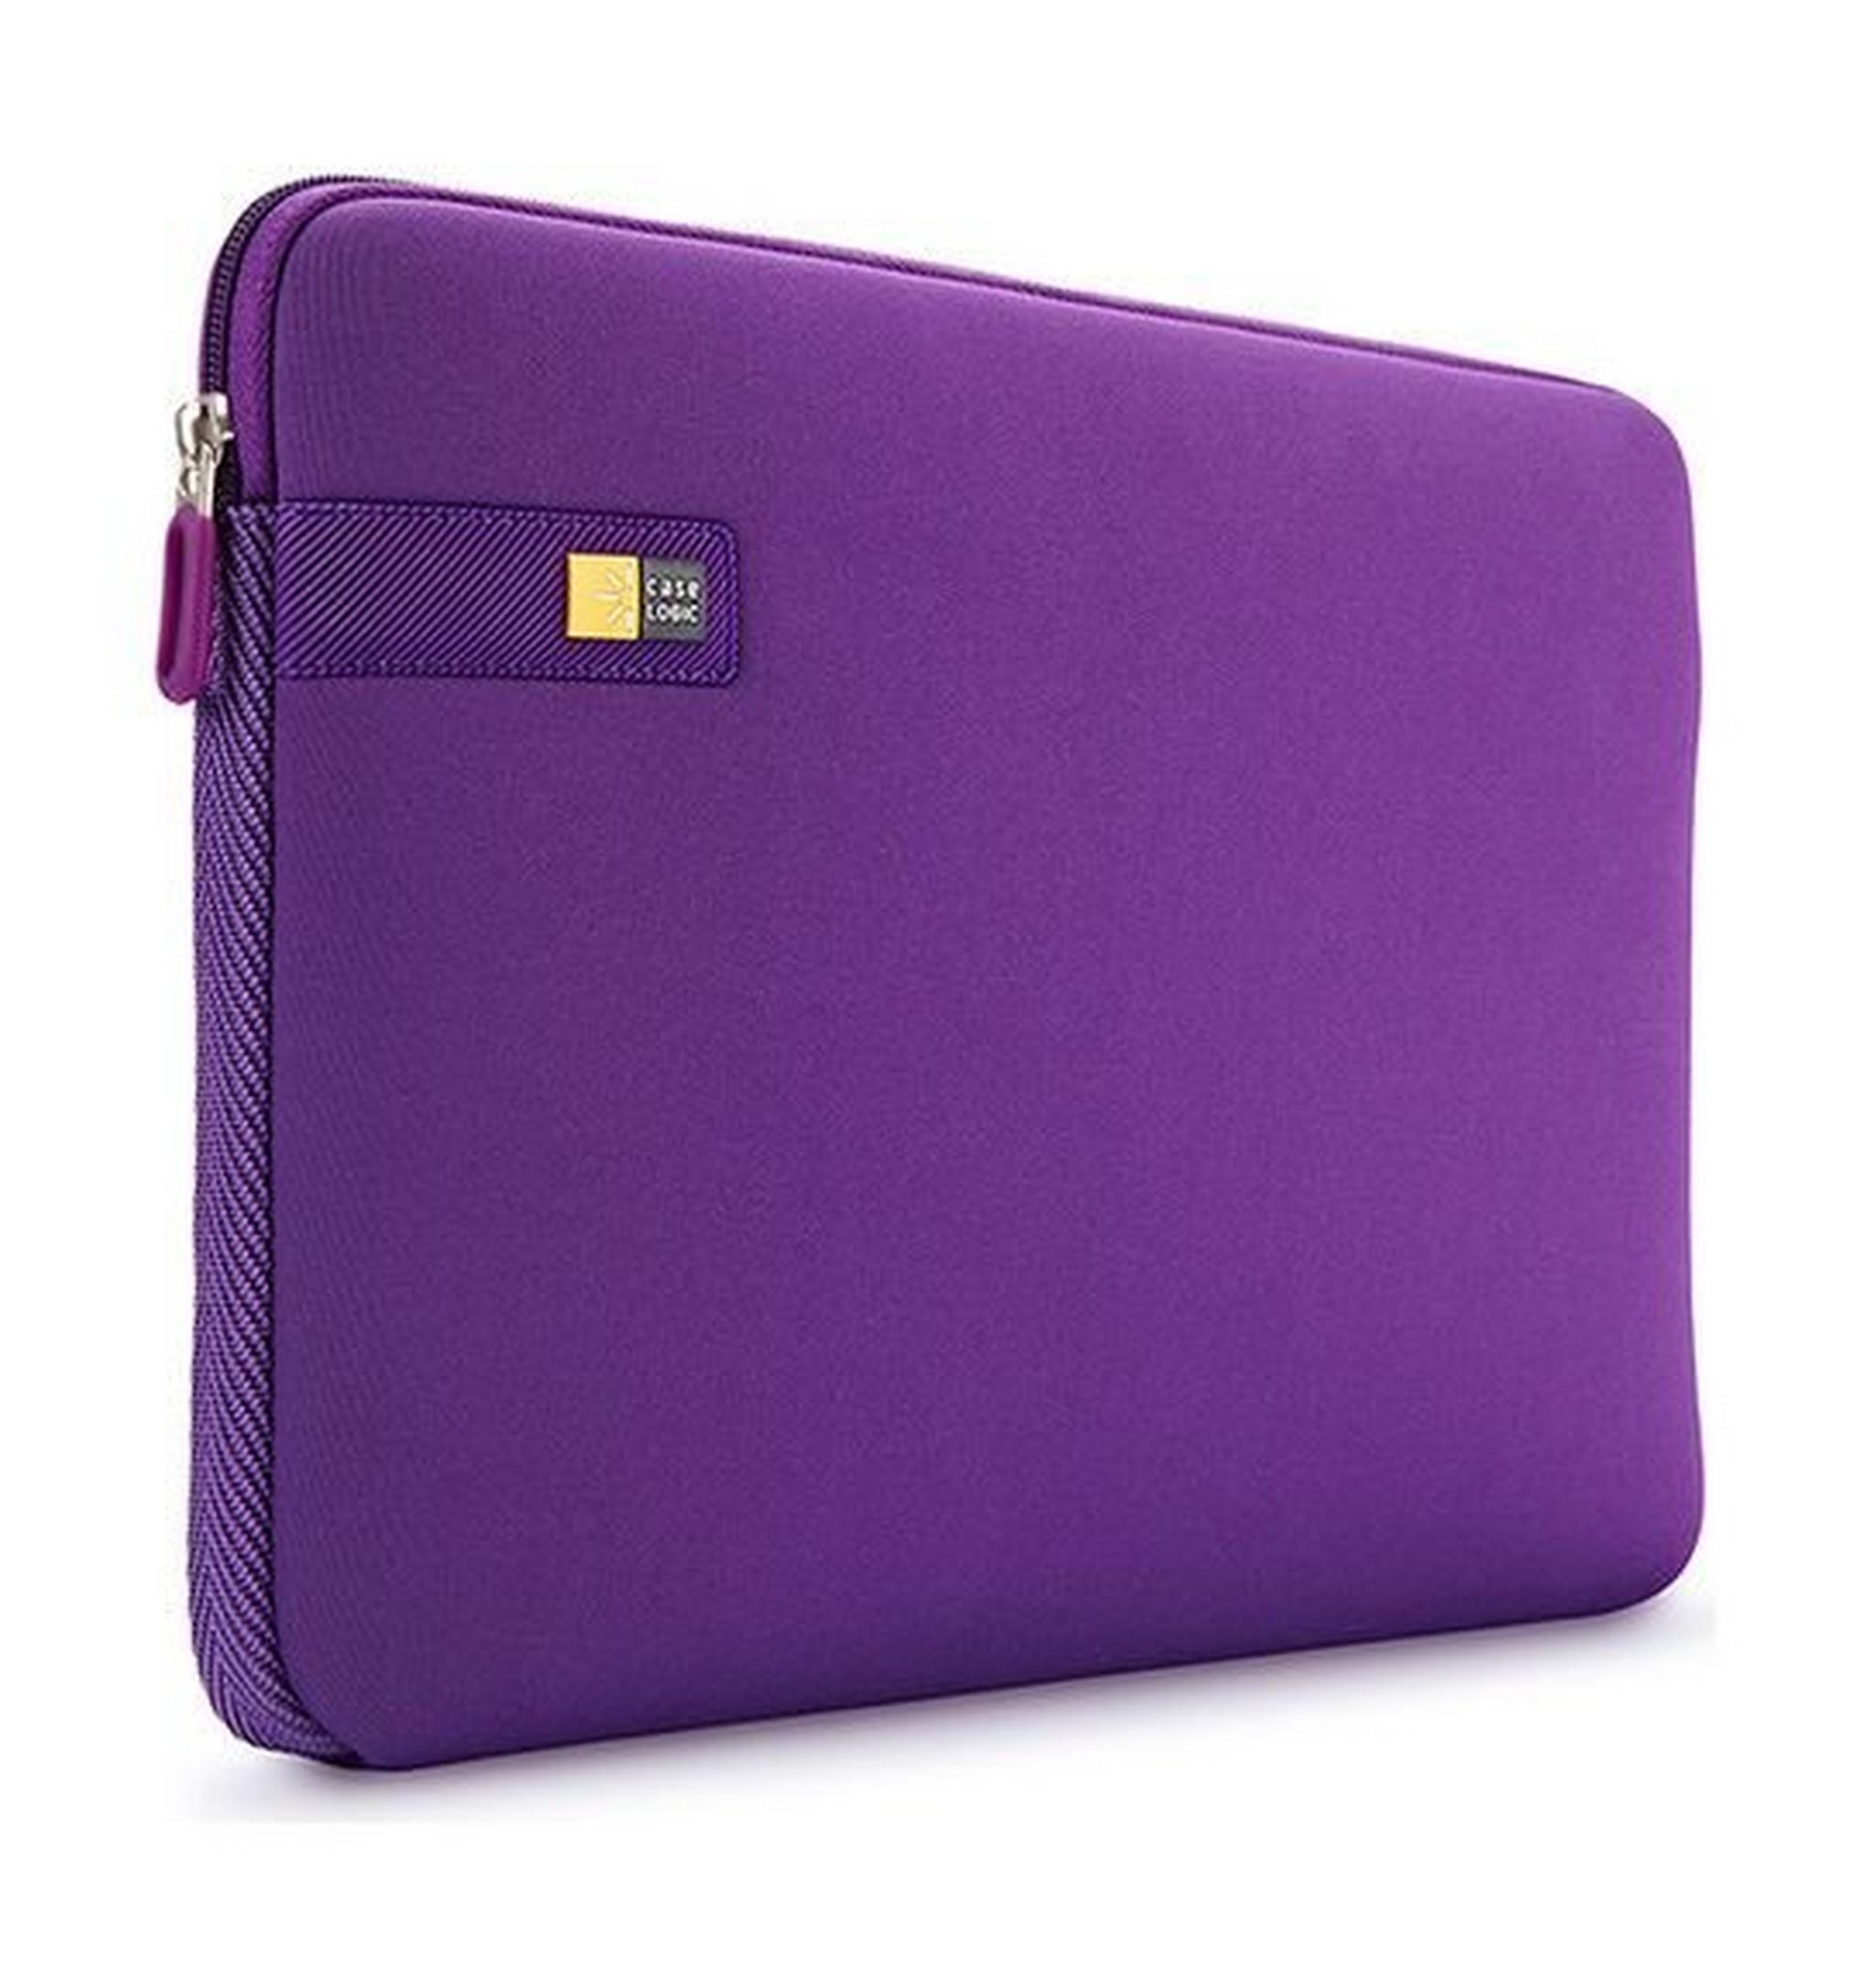 Case Logic Universal Sleeve for 13.3-inch Laptop (LAPS113) - Purple